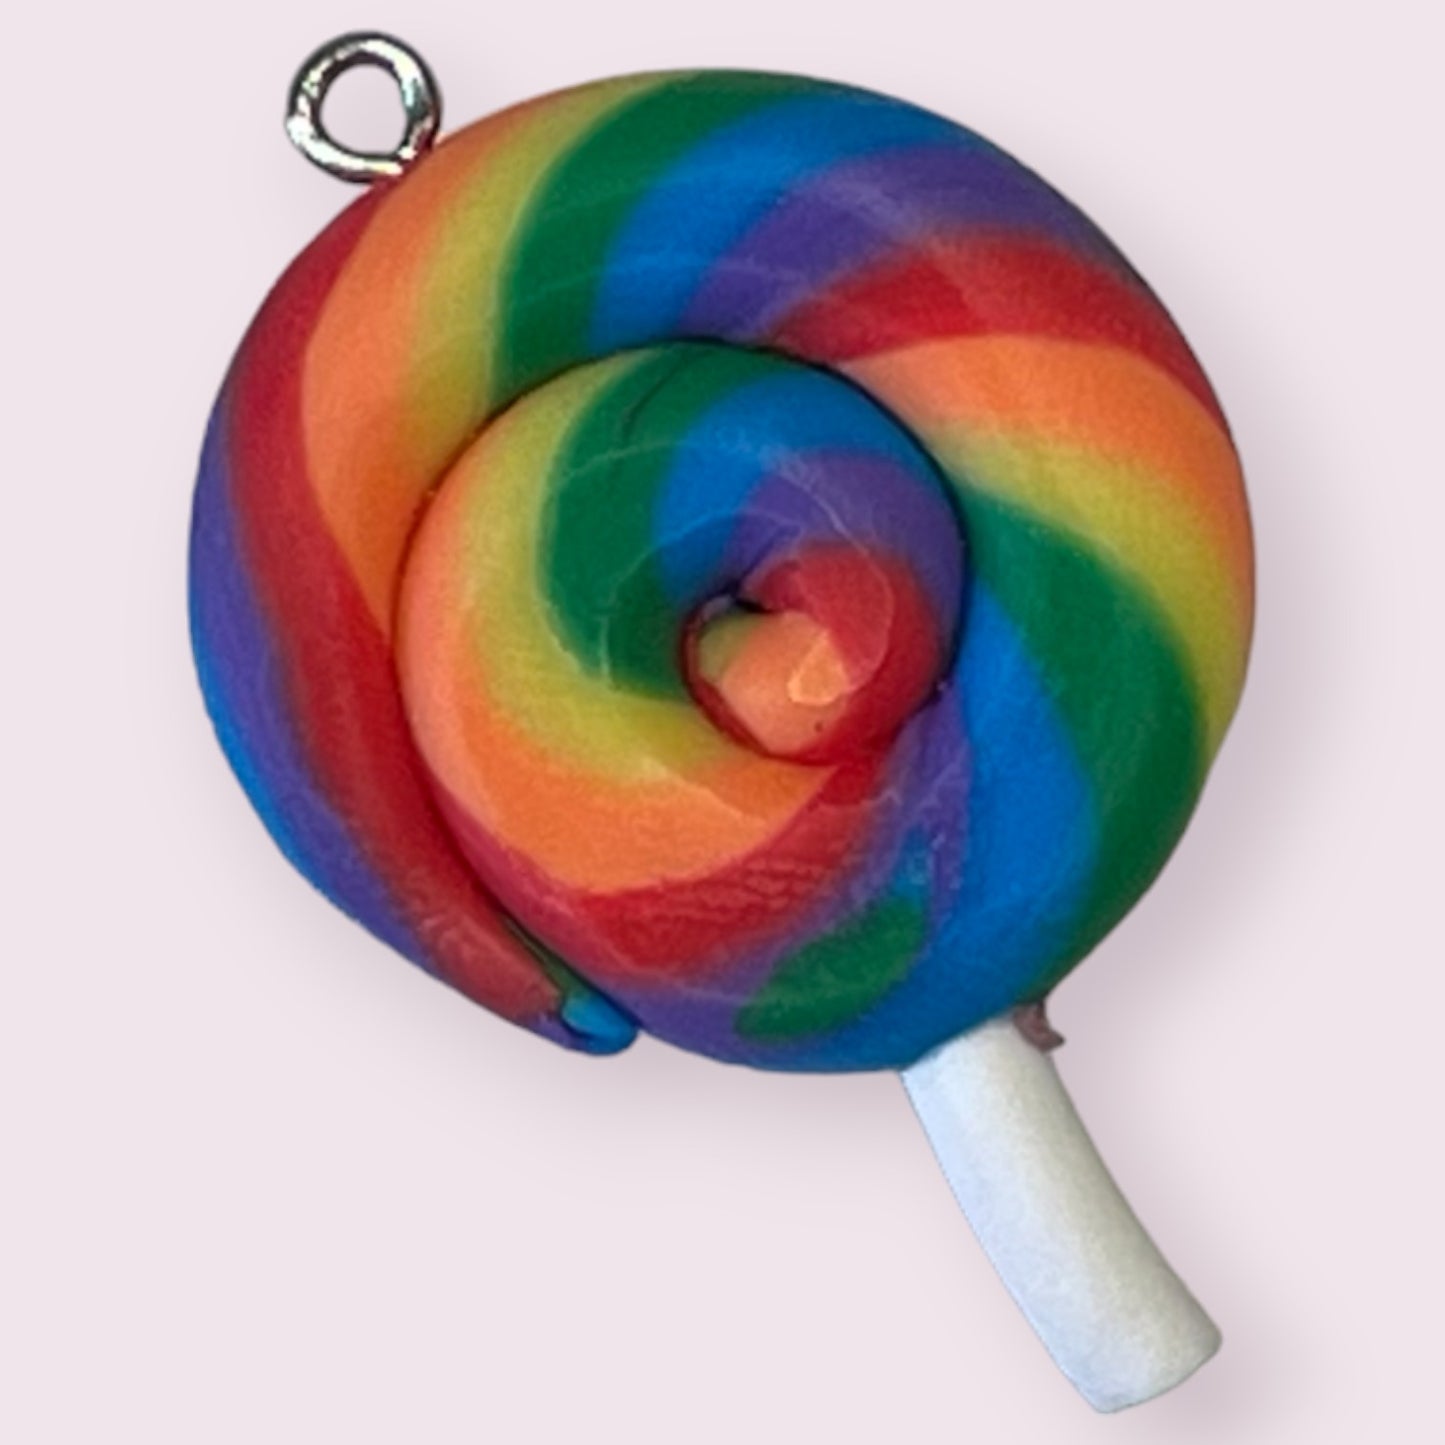 Lollipop Jewellery Charm with loop - soft polymer - 2ea (1 pair)